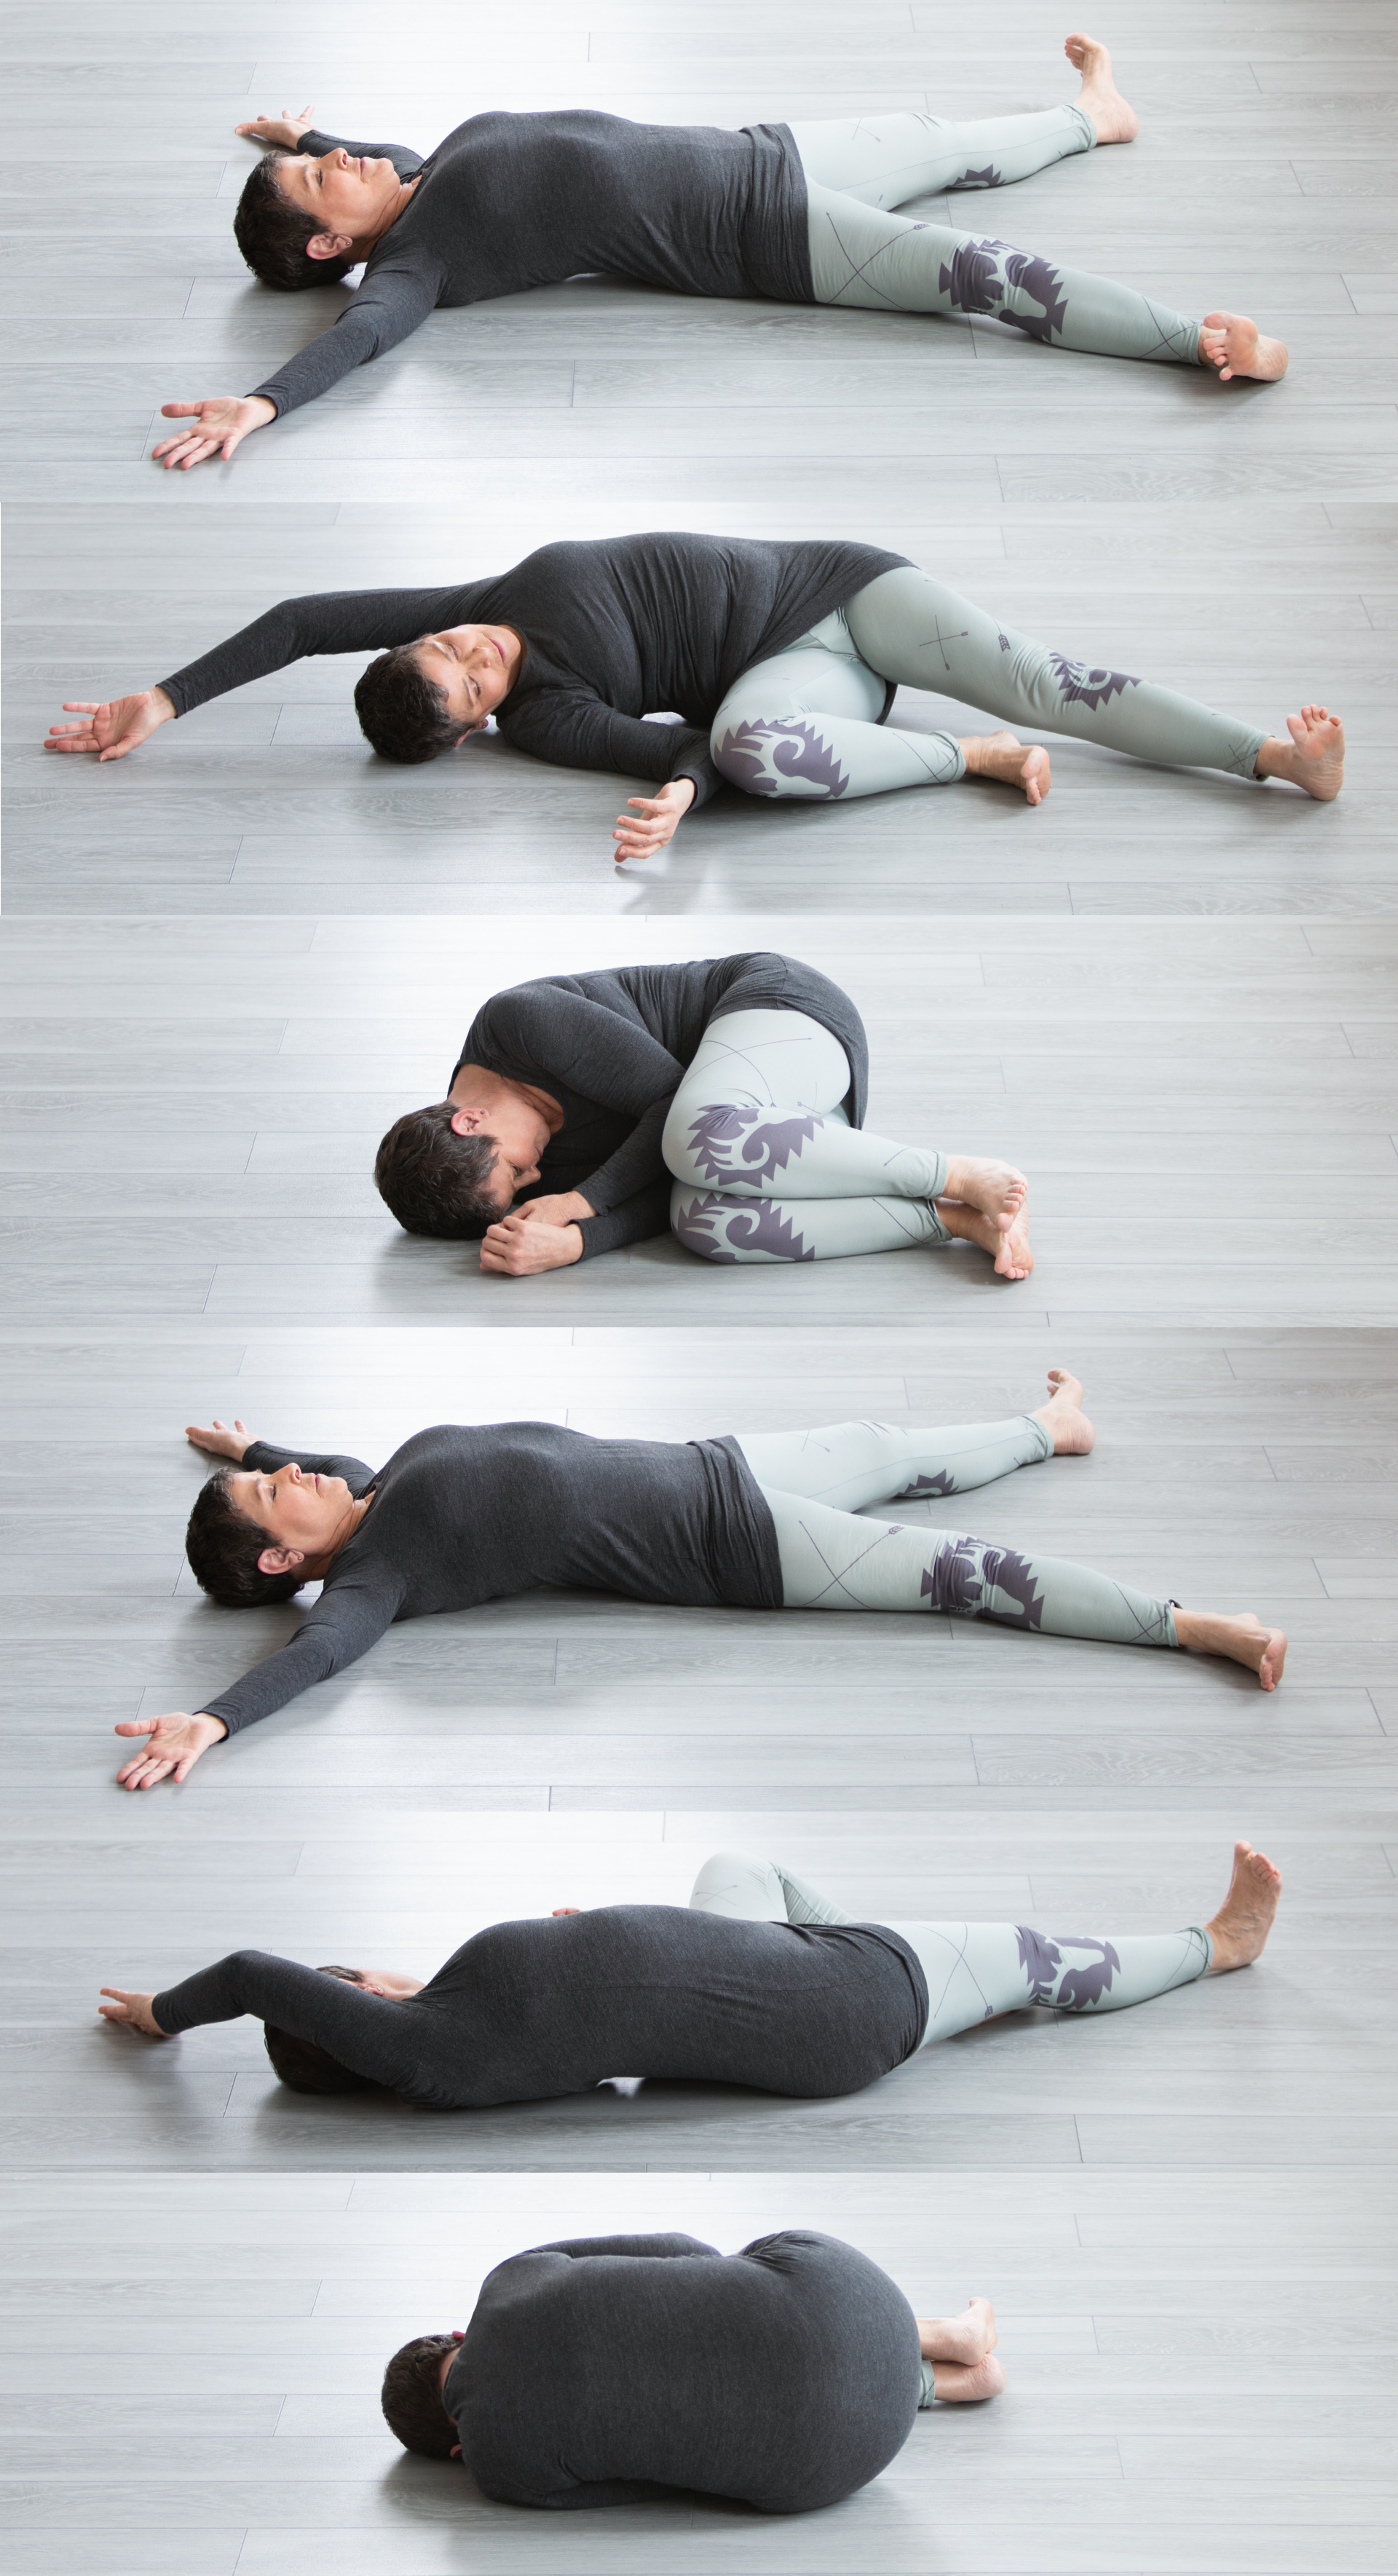 Yoga Poses For Sleep | Yoga poses for sleep, Cool yoga poses, Yoga poses